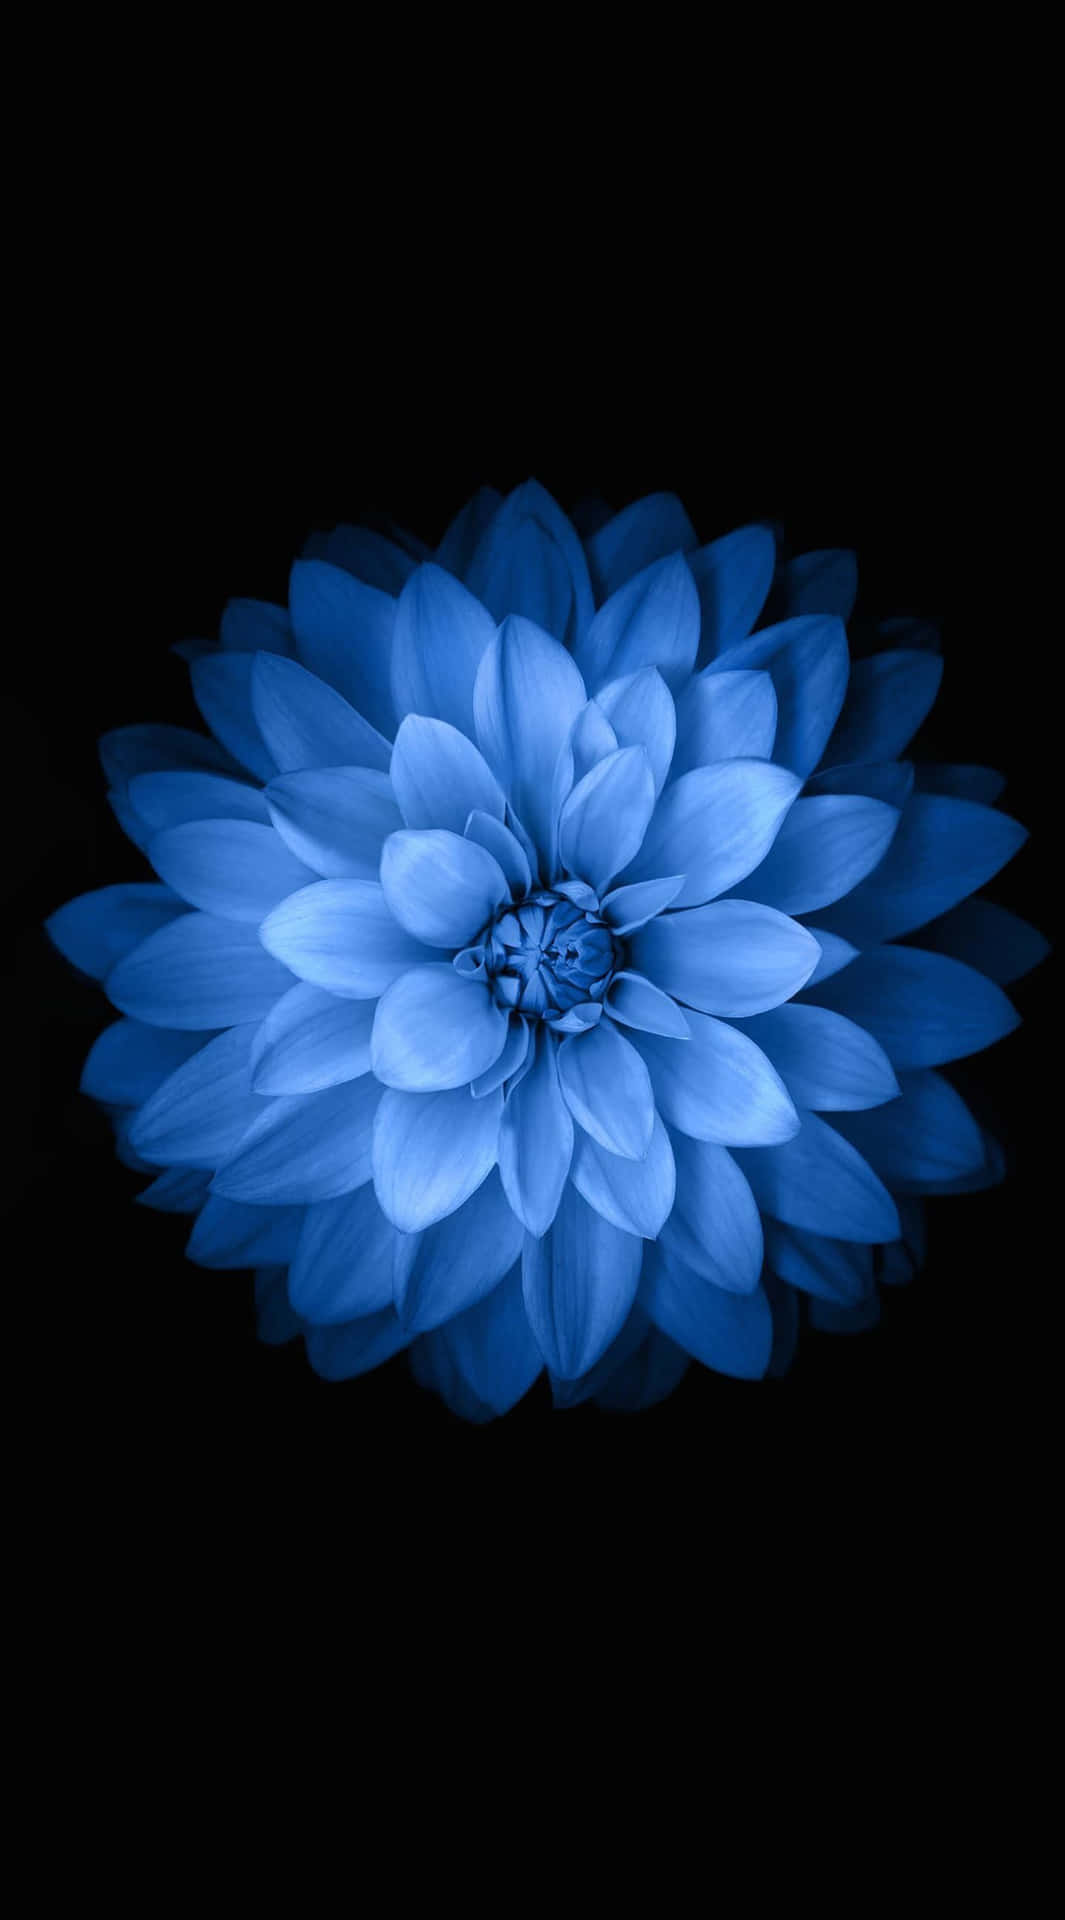 Dark Aesthetic Lotus Blue Flower Background